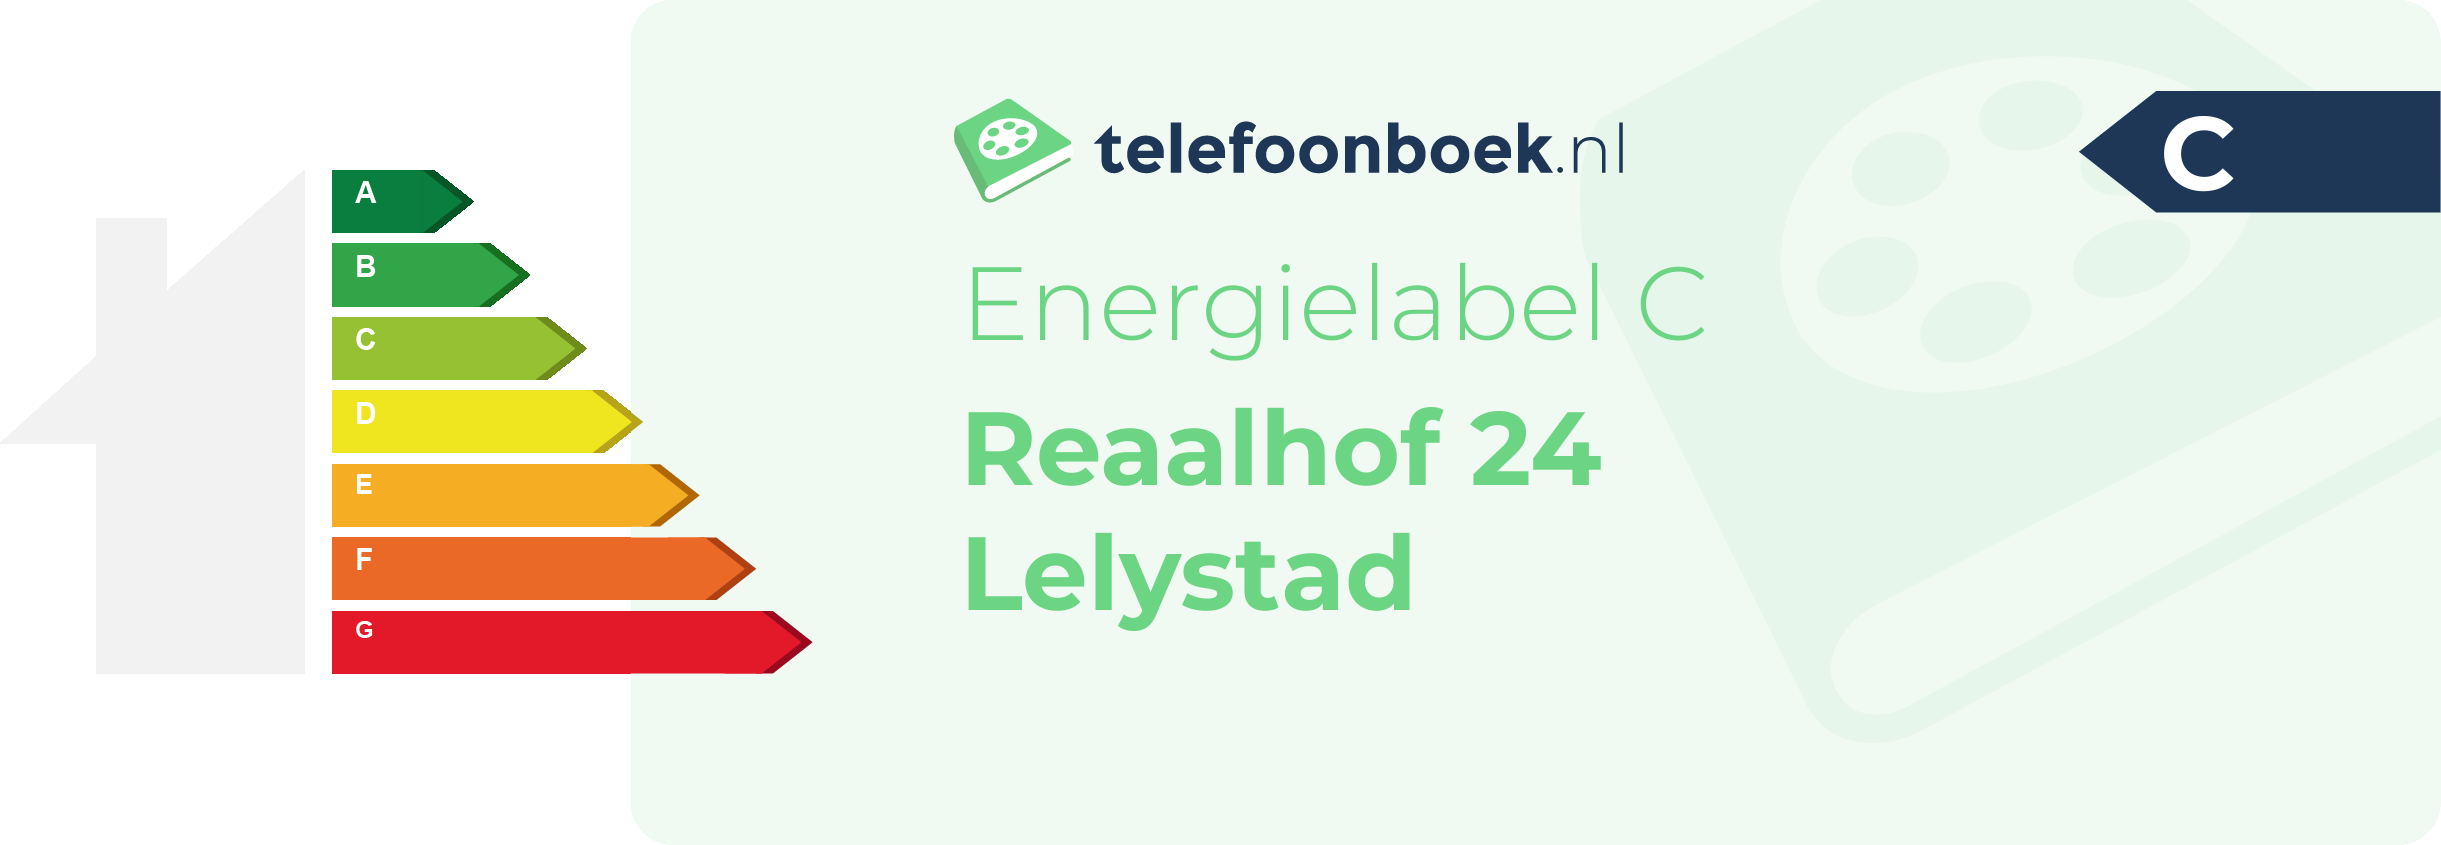 Energielabel Reaalhof 24 Lelystad